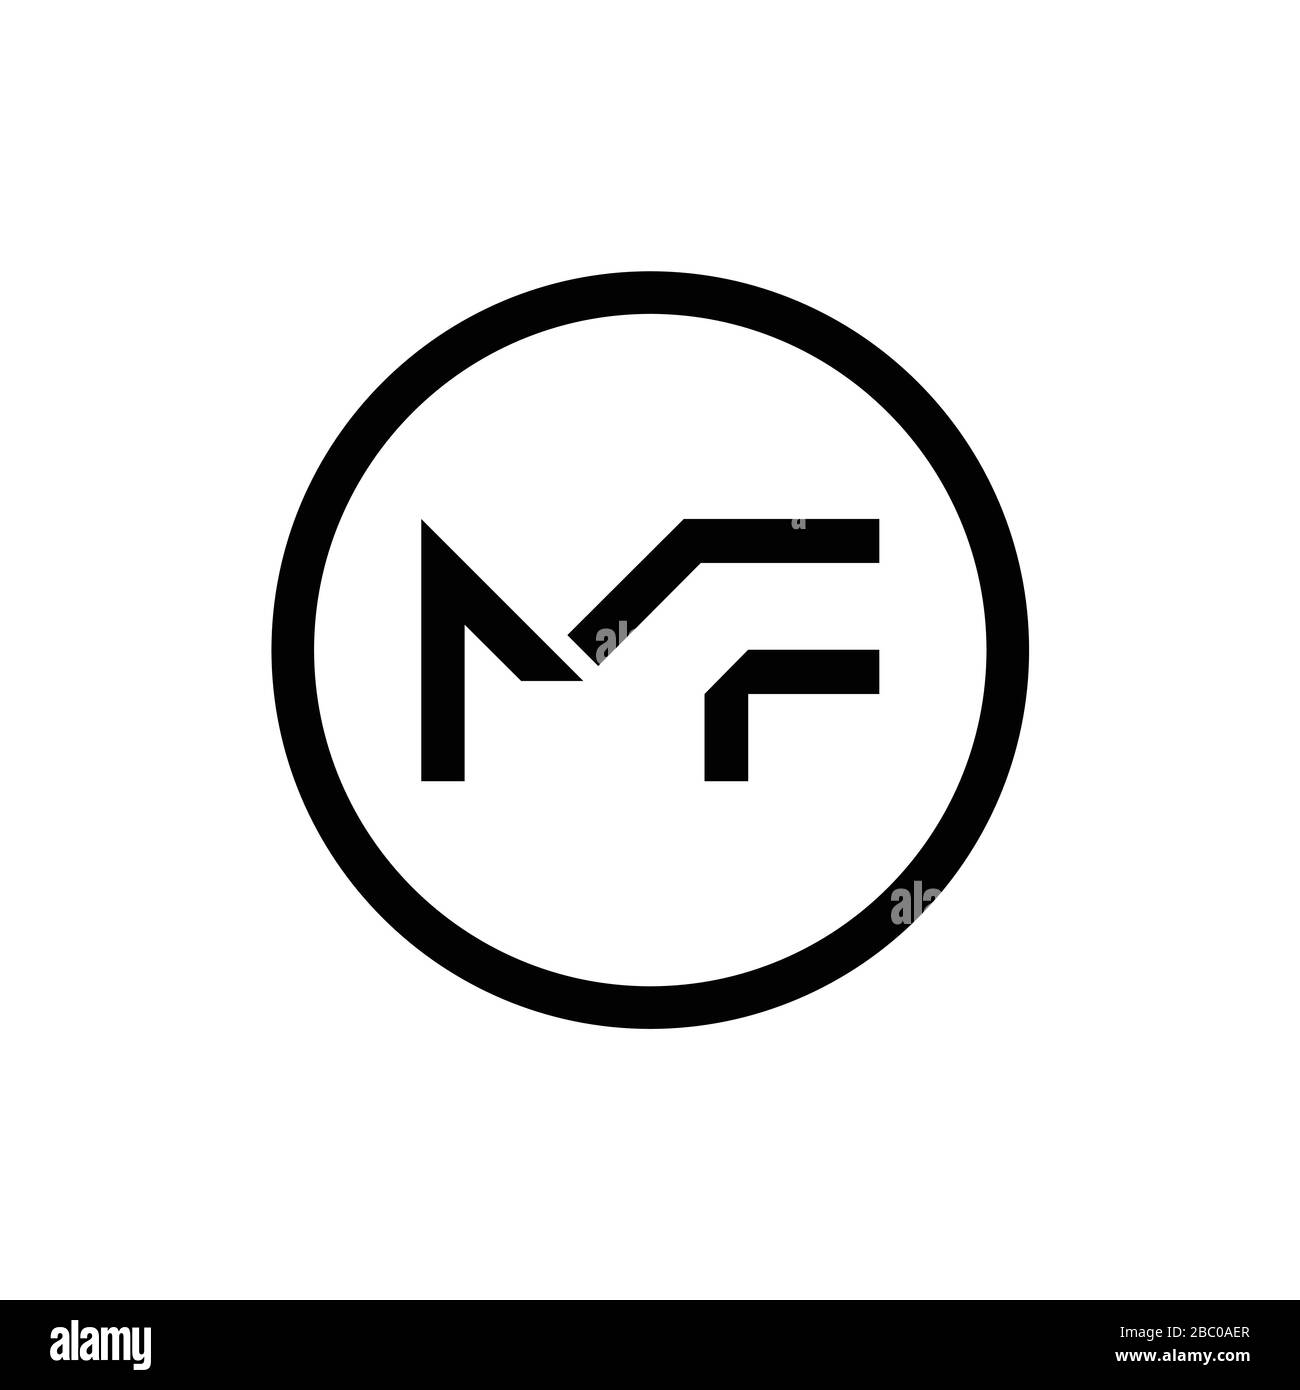 Page 2 | Mf logo Vectors & Illustrations for Free Download | Freepik